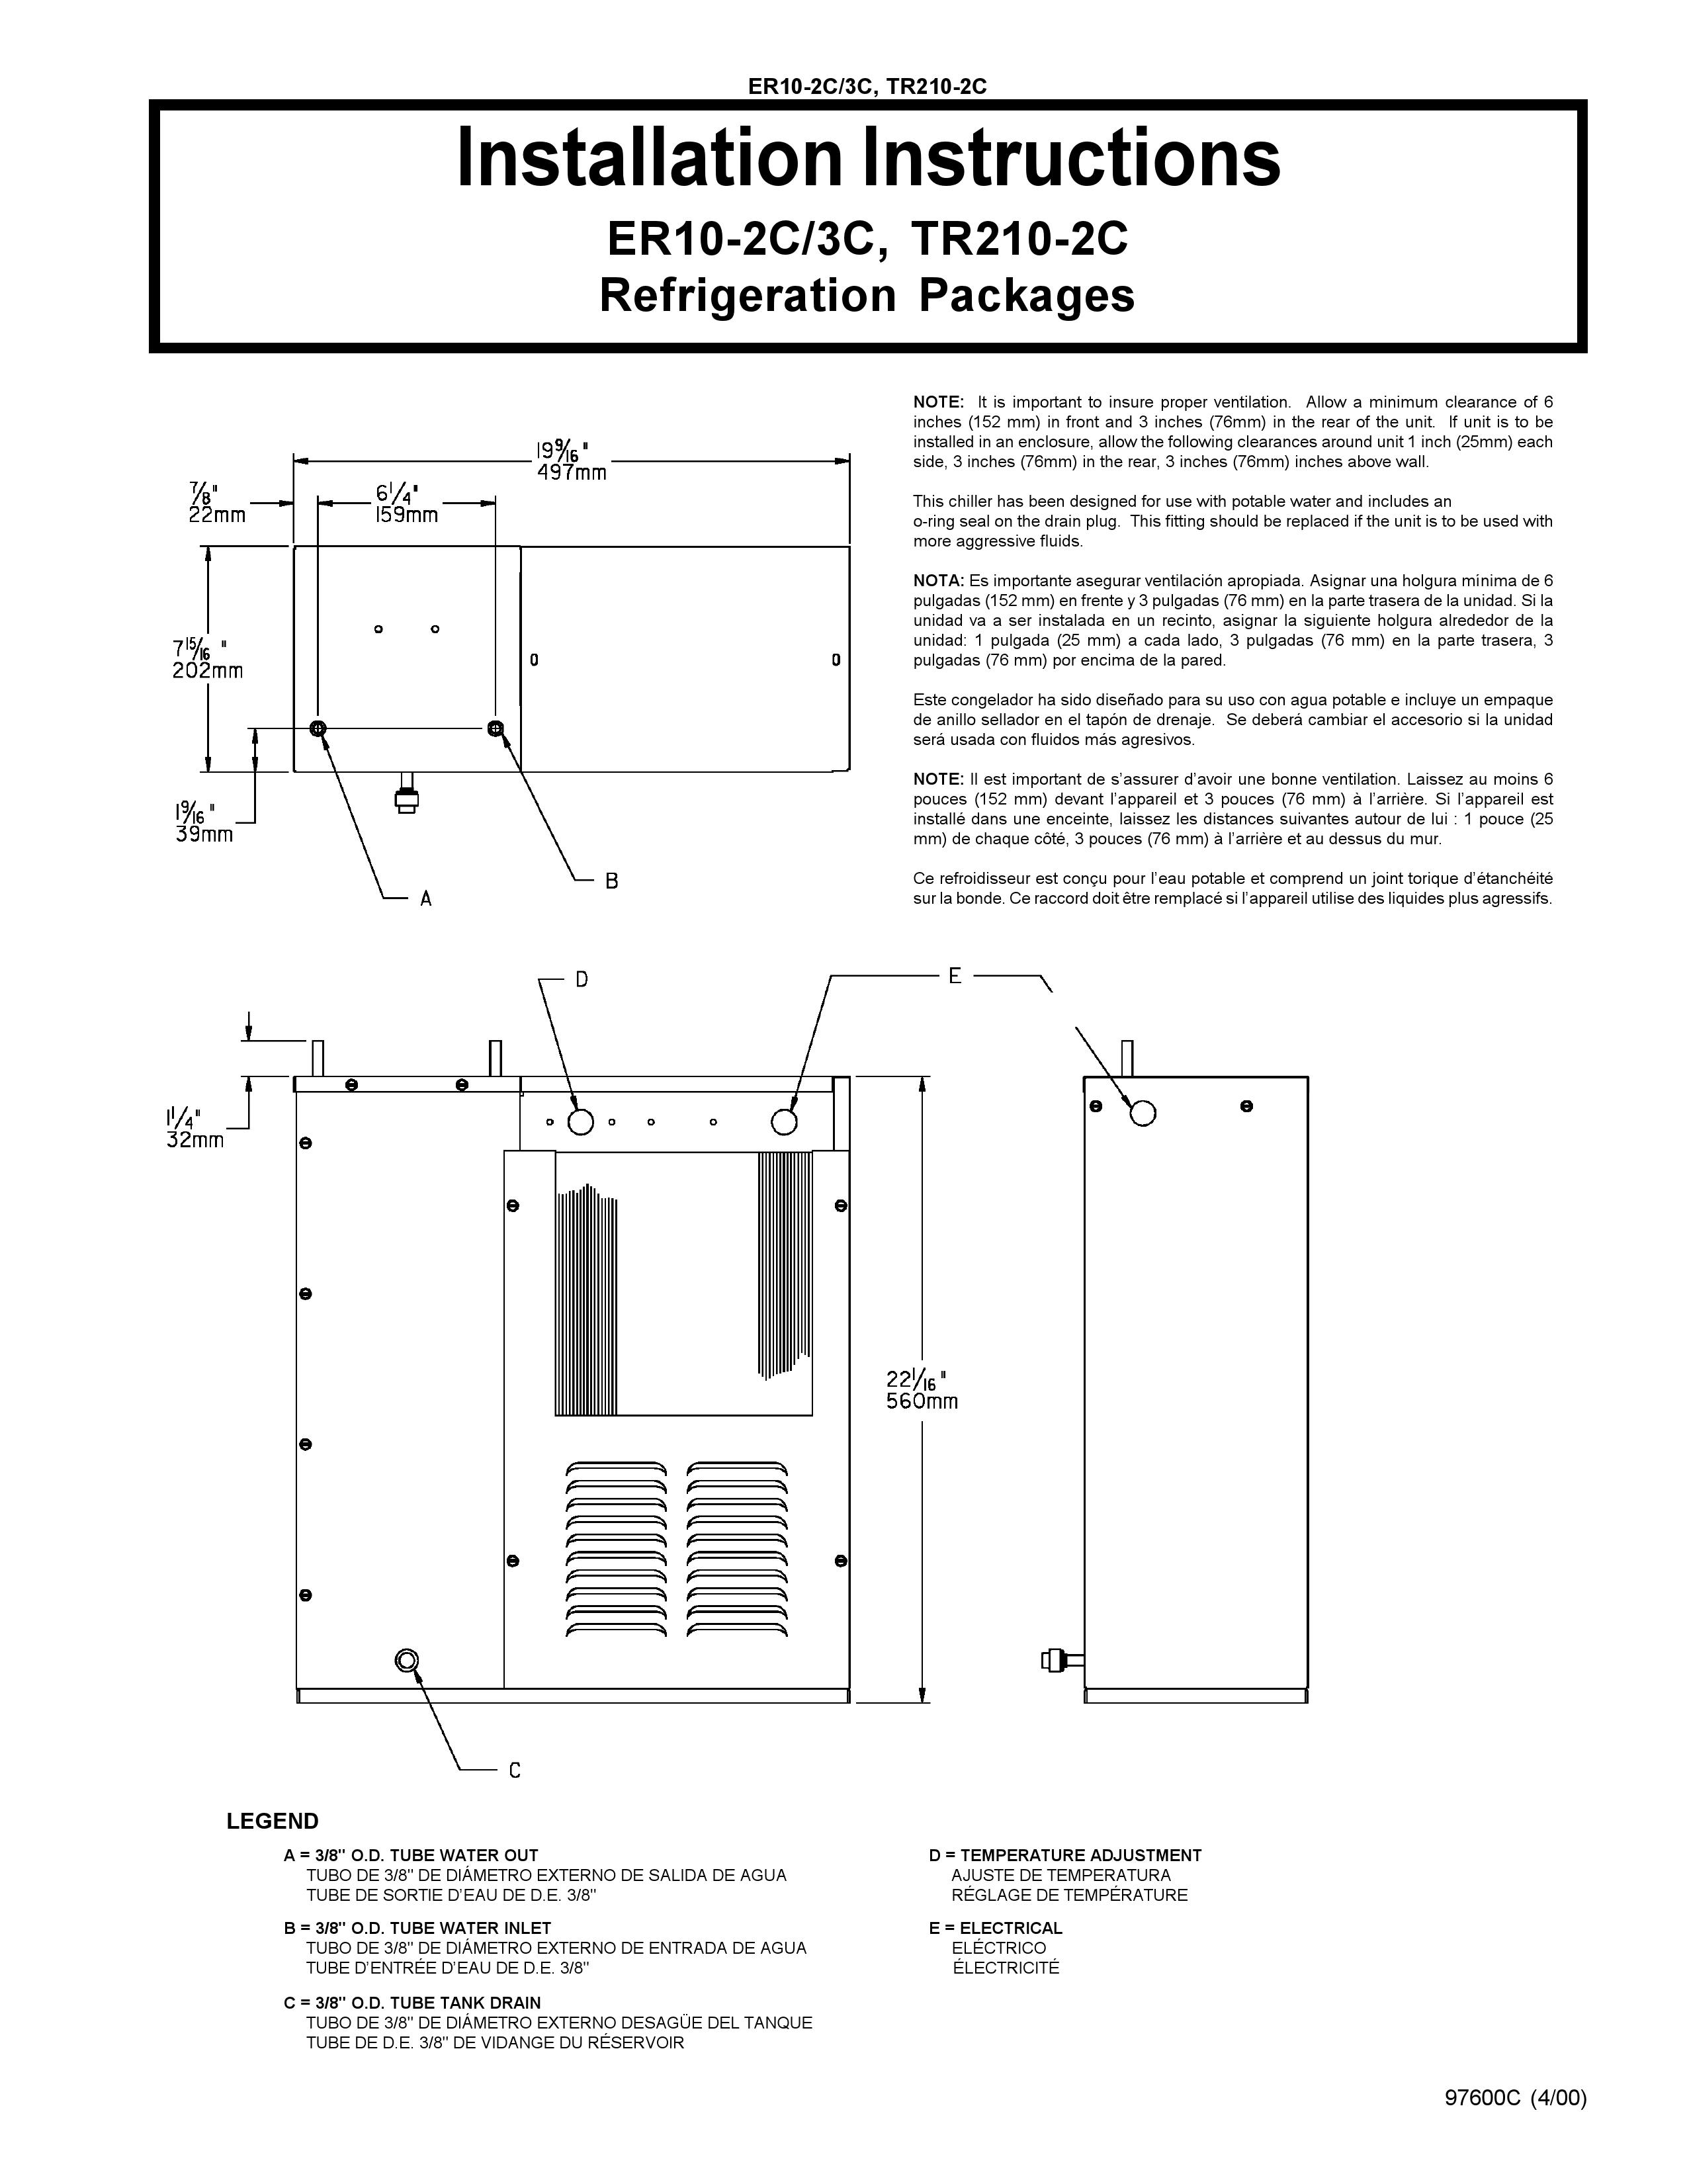 Elkay ER10.2C Refrigerator User Manual